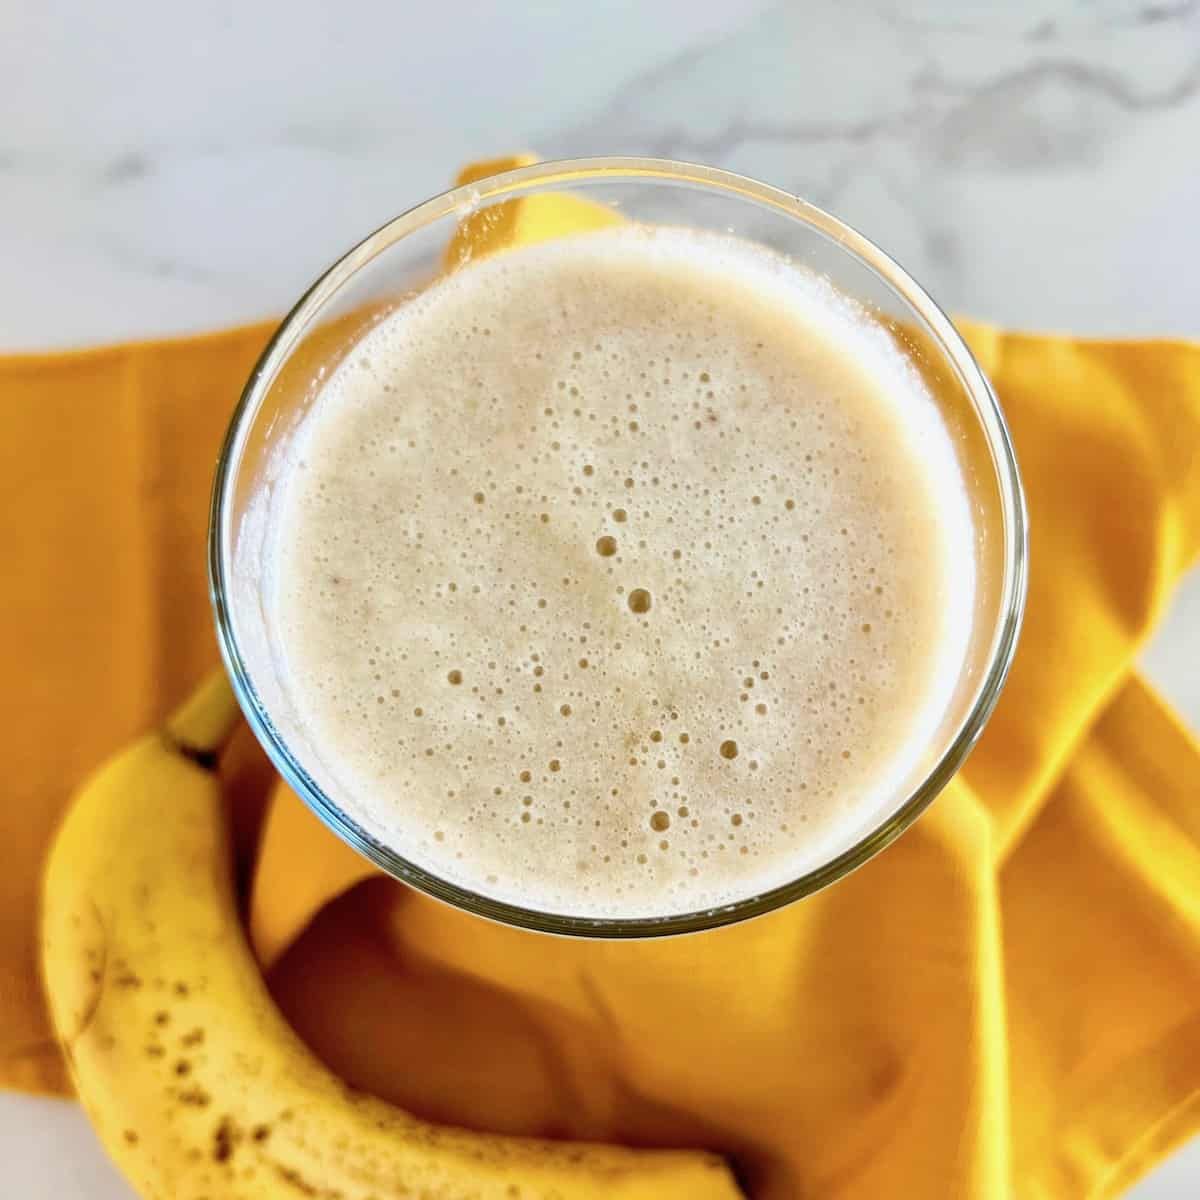 Banana Juice Recipe - The Short Order Cook